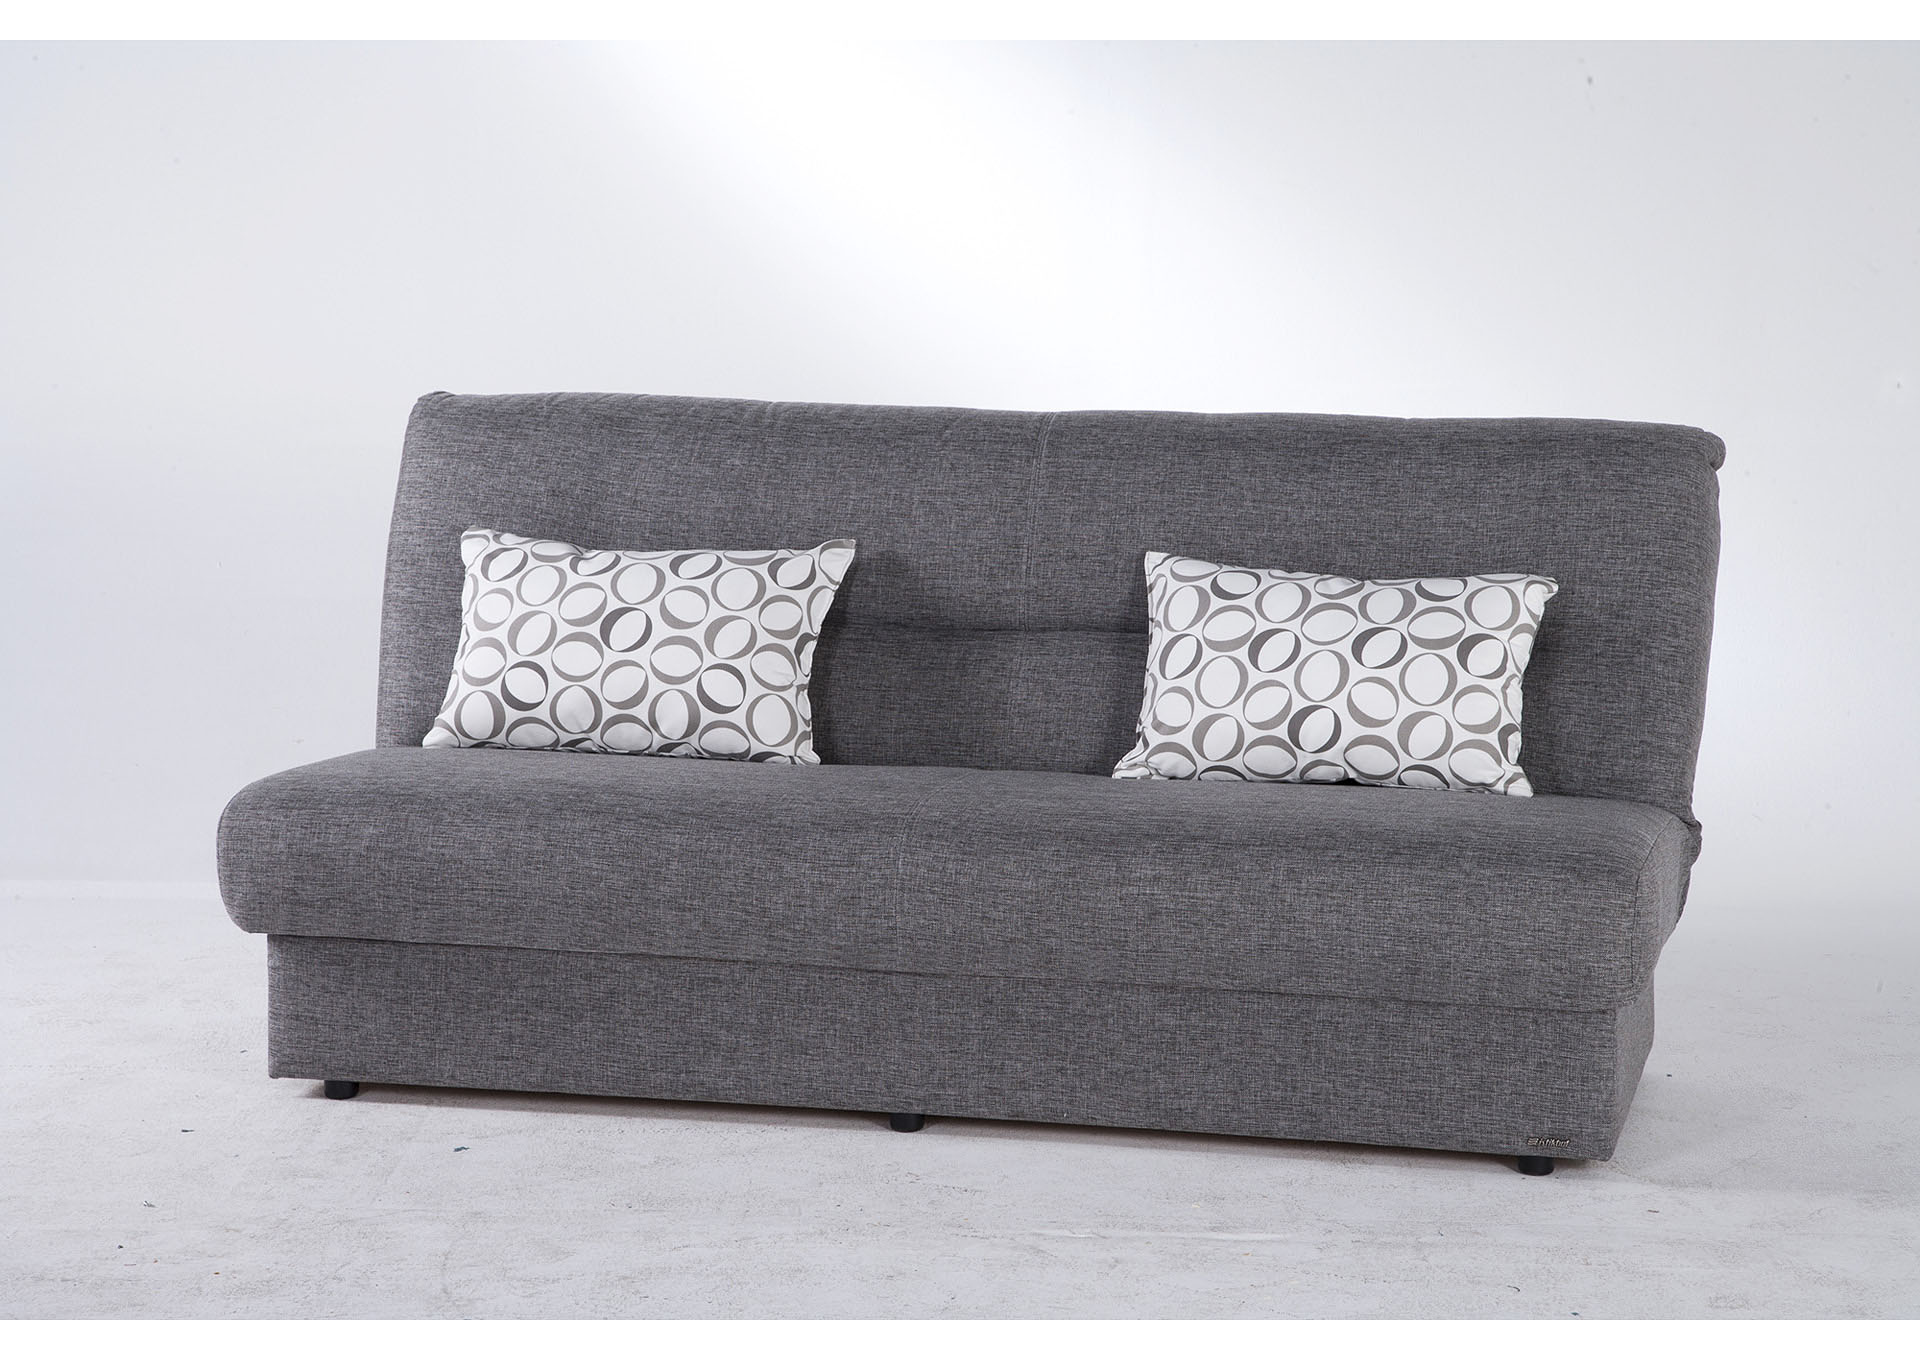 Regata Diego Gray 3 Seat Sleeper Sofa,Hudson Furniture & Bedding